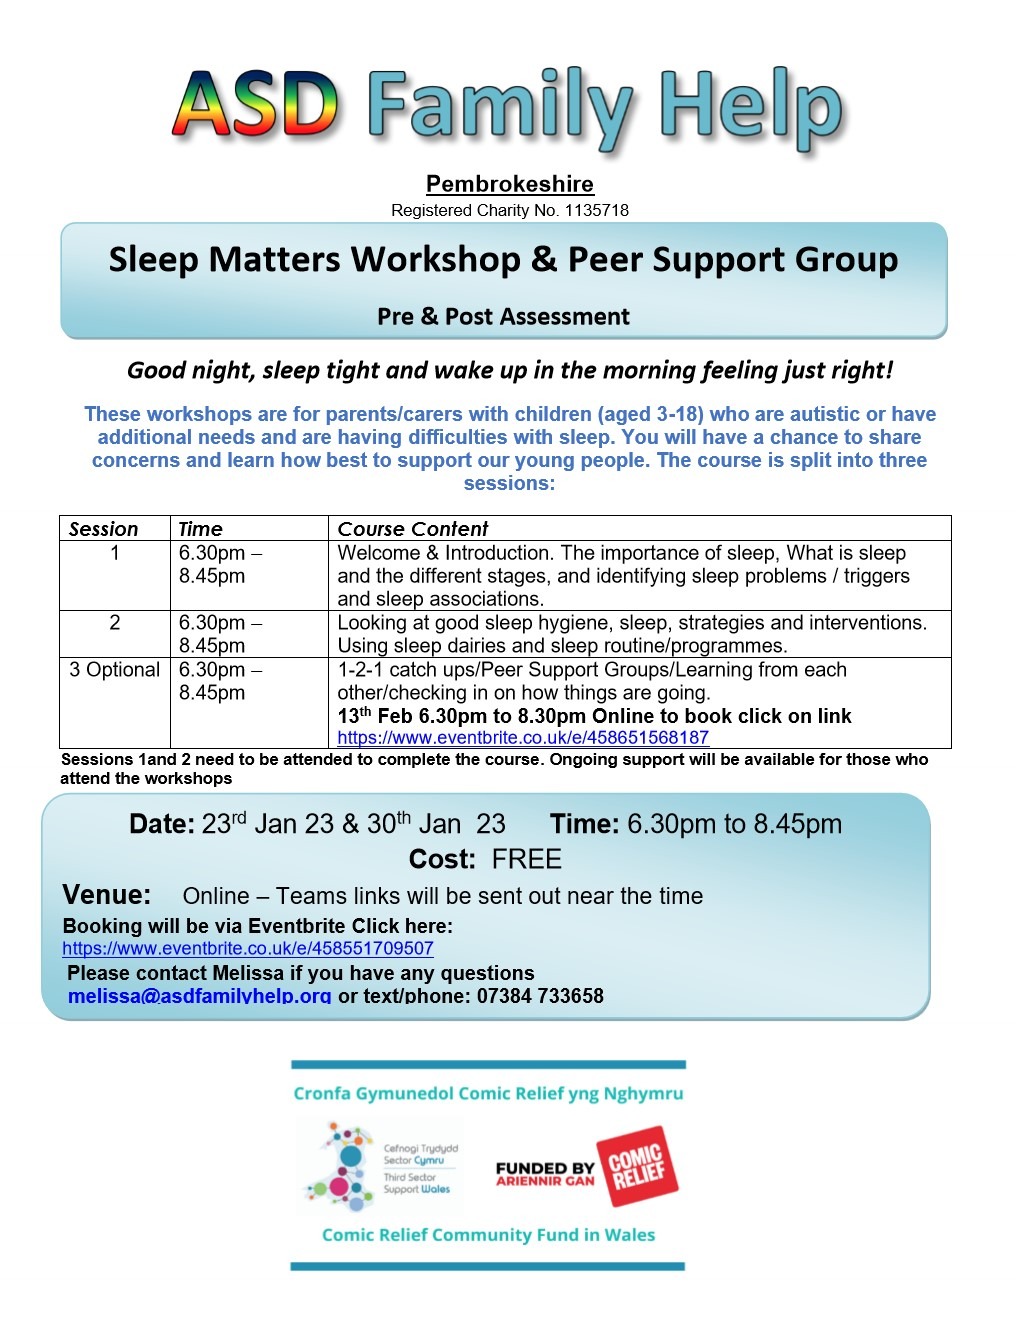 ASD FH Sleep Matters Workshop Online Jan 23_1